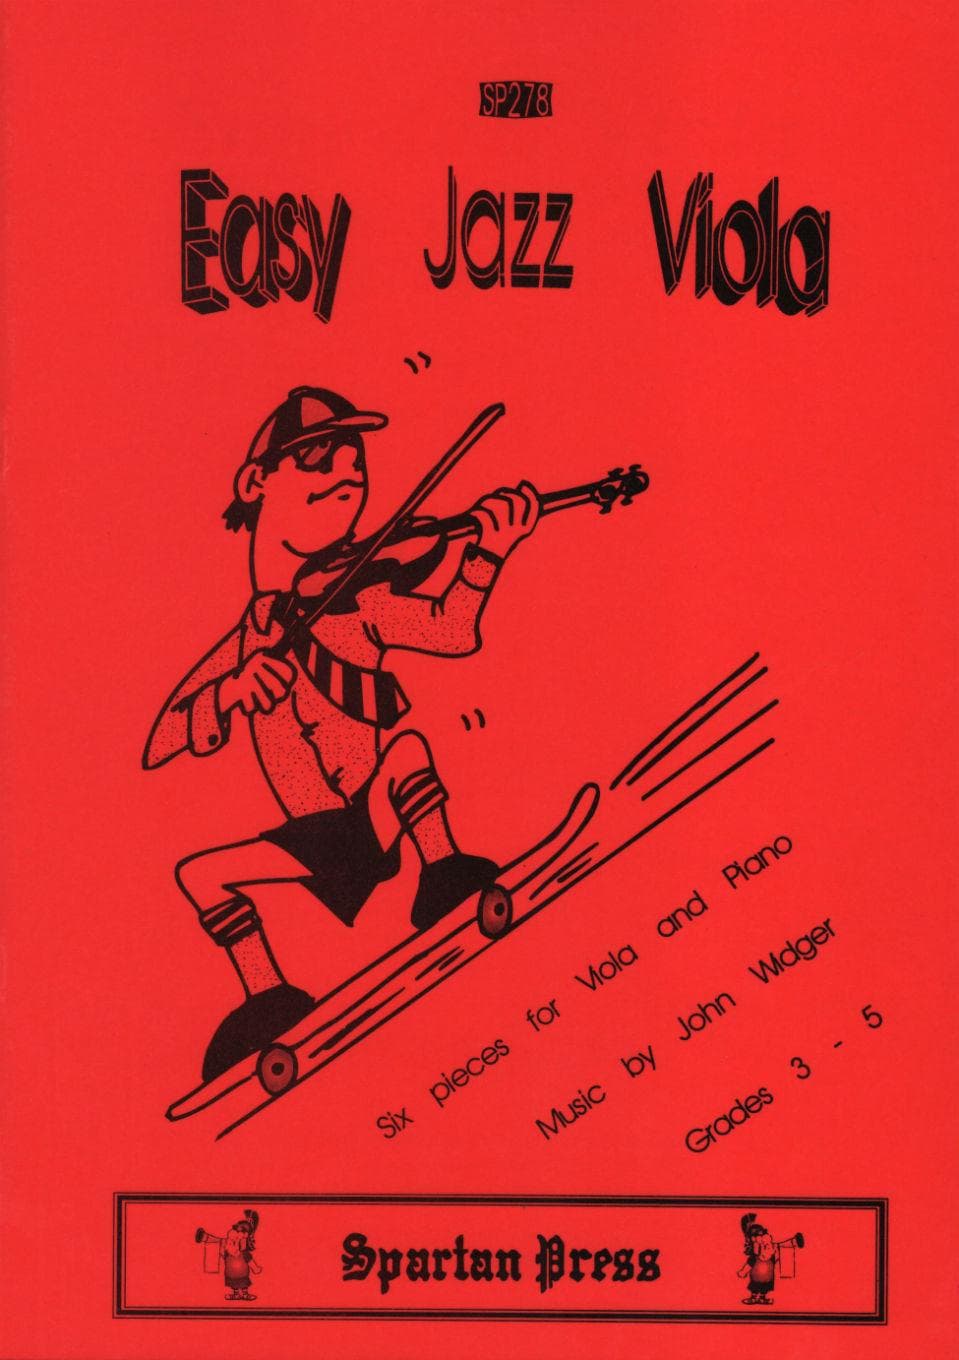 Widger - Easy Jazz Viola Published by Spartan Press